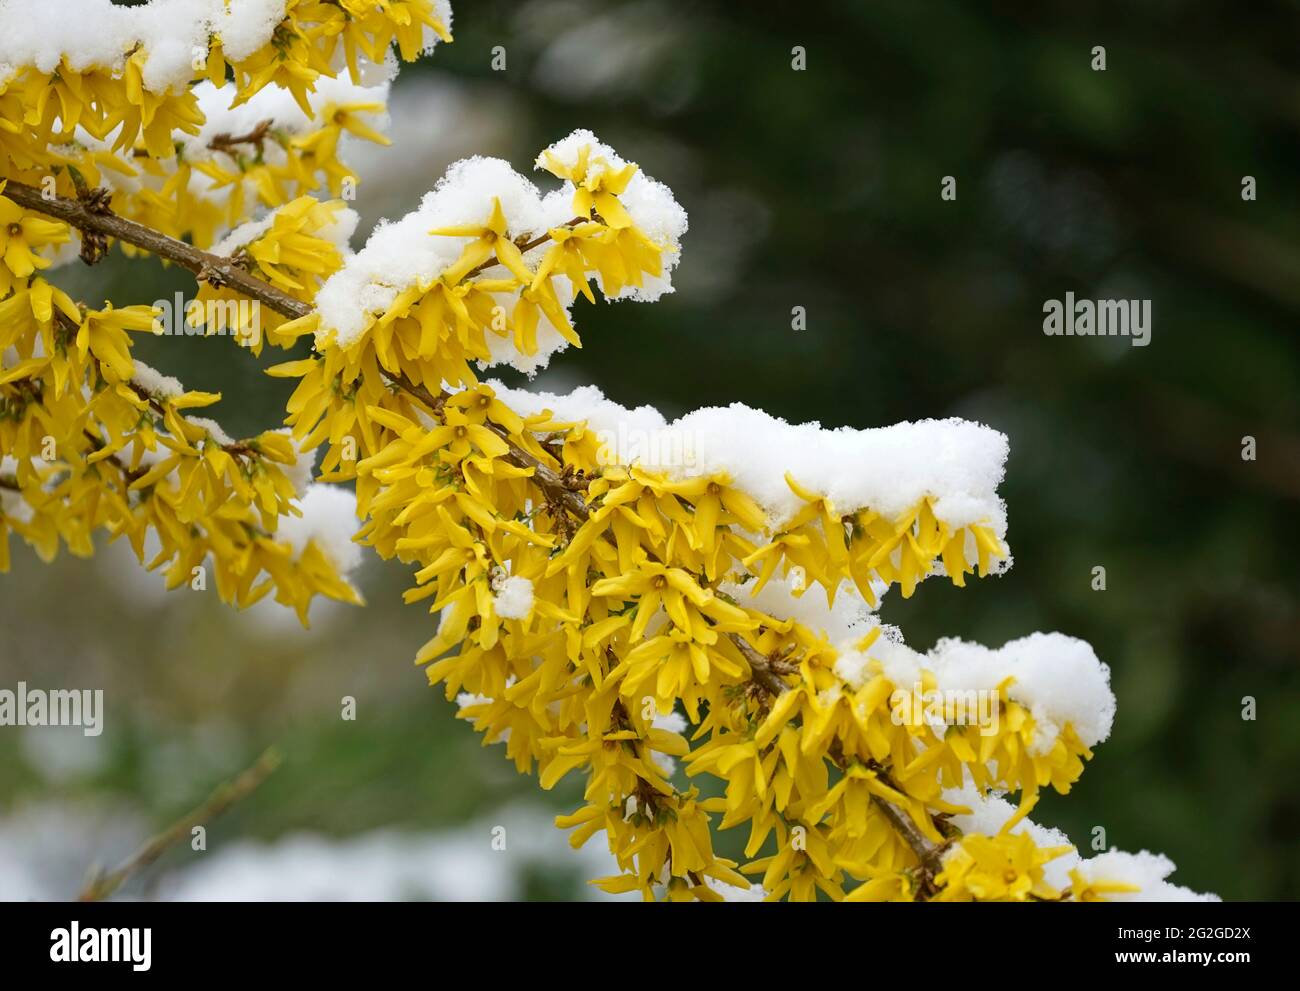 Germany, Bavaria, Upper Bavaria, shrub, forsythia, blossoms covered in snow, April weather Stock Photo